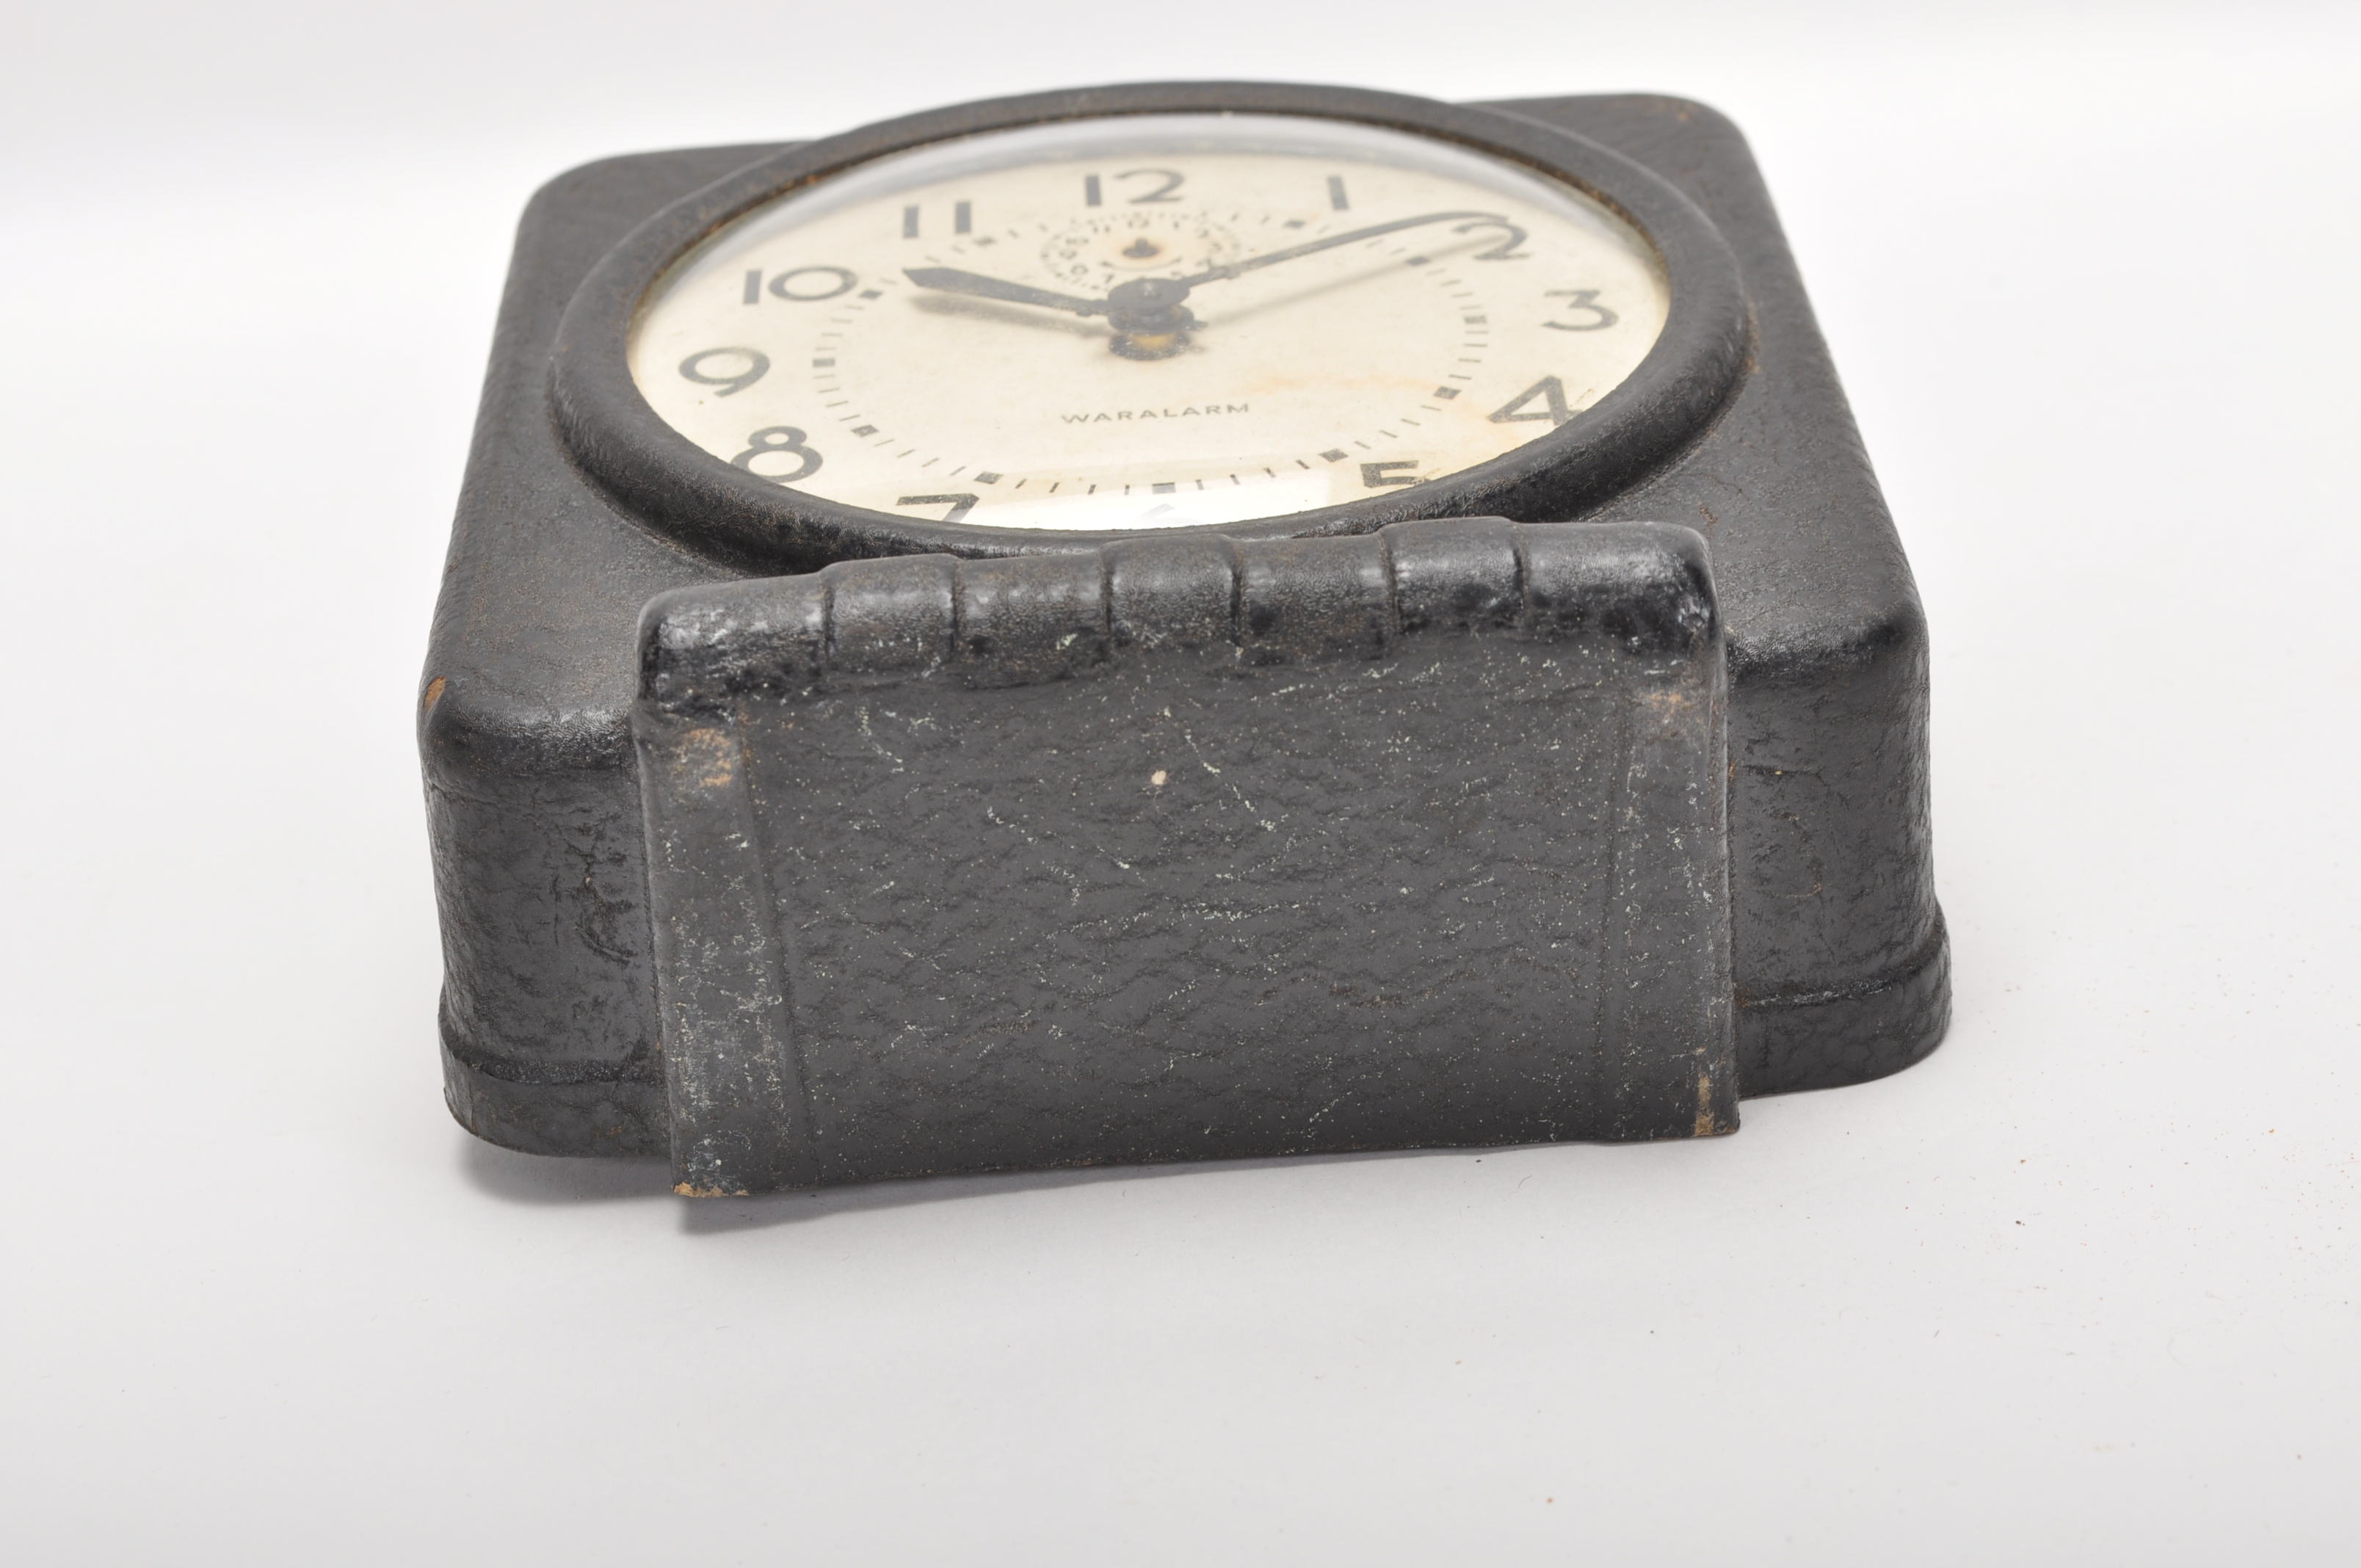 A mid 20th Century WWII era American Cardboard Waralarm War alarm clock made in 1944 by Western - Image 8 of 8